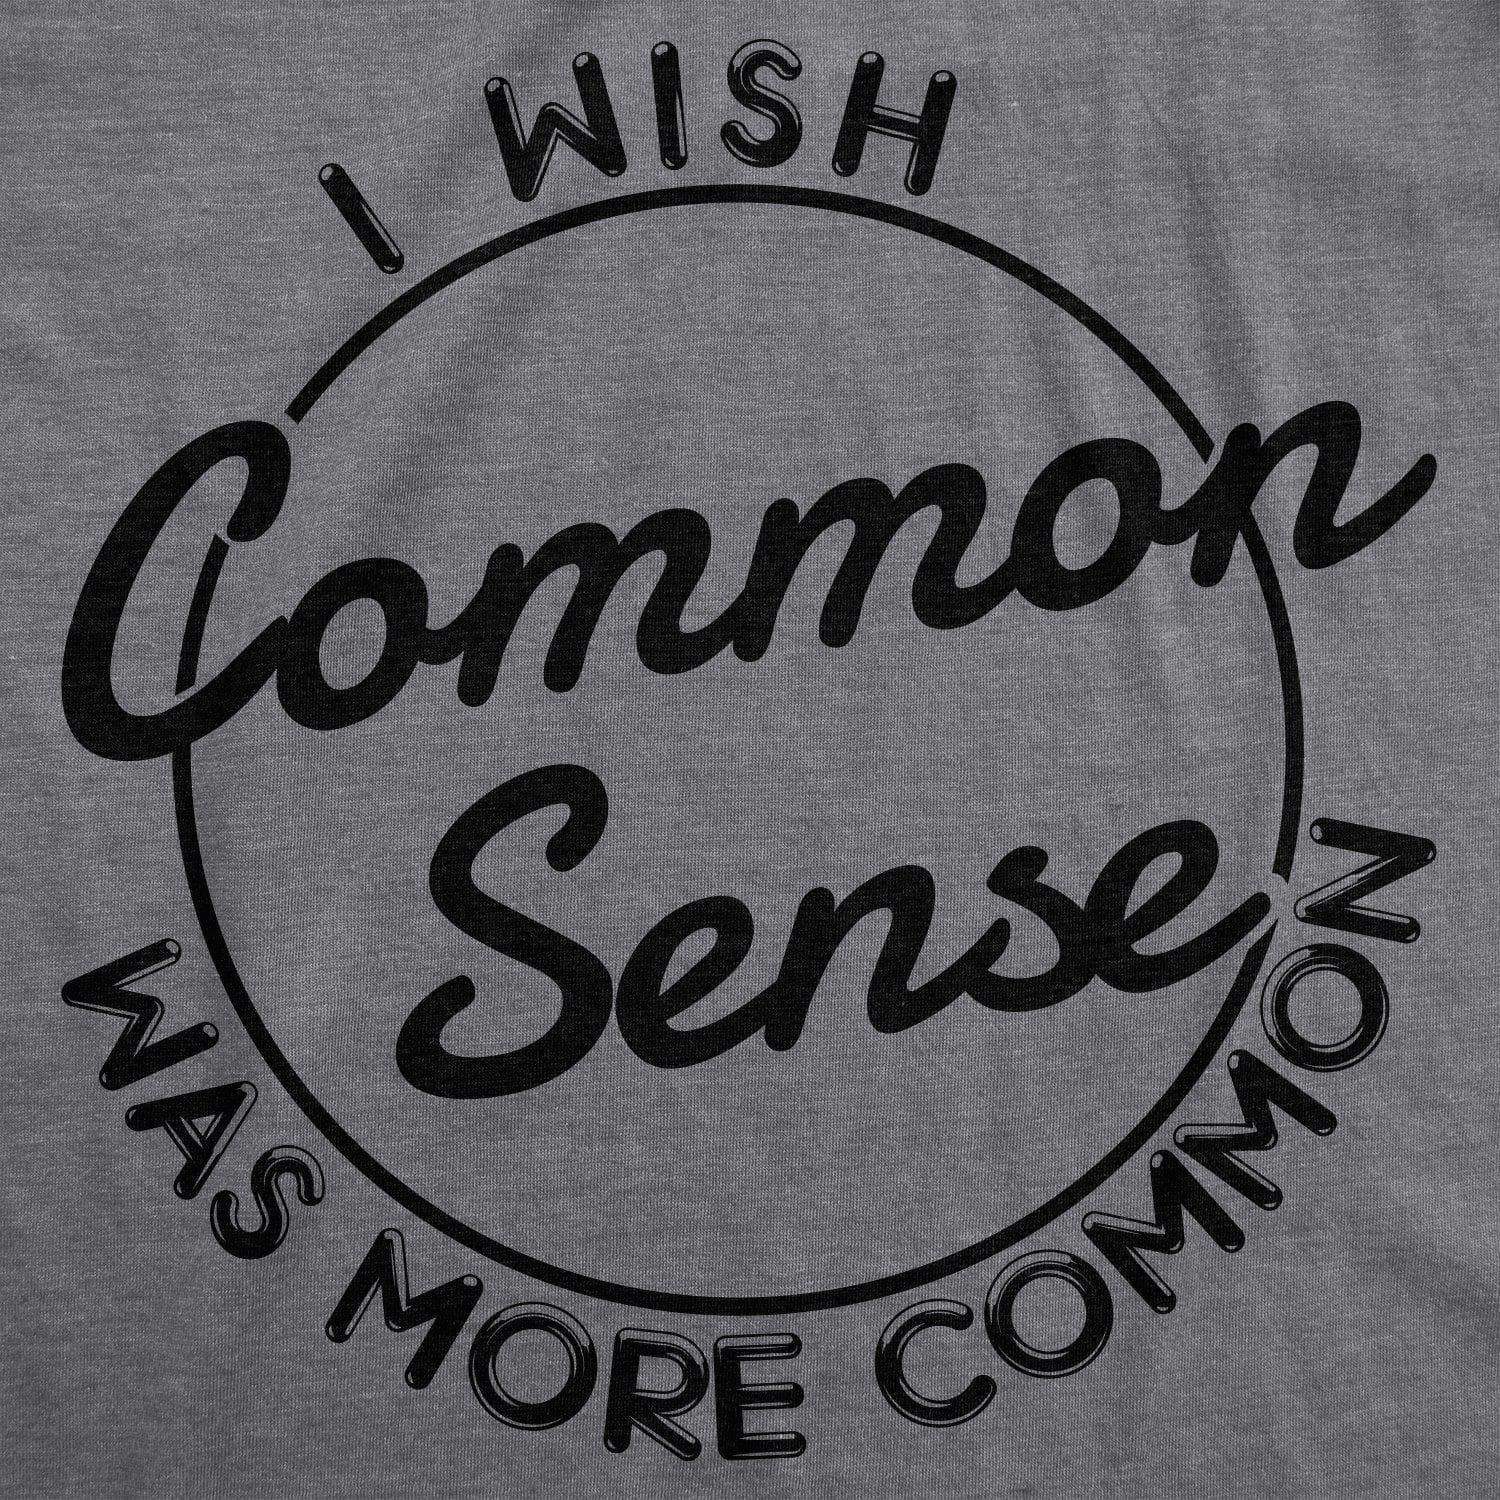 I Wish Common Sense Was More Common Women's Tshirt  -  Crazy Dog T-Shirts